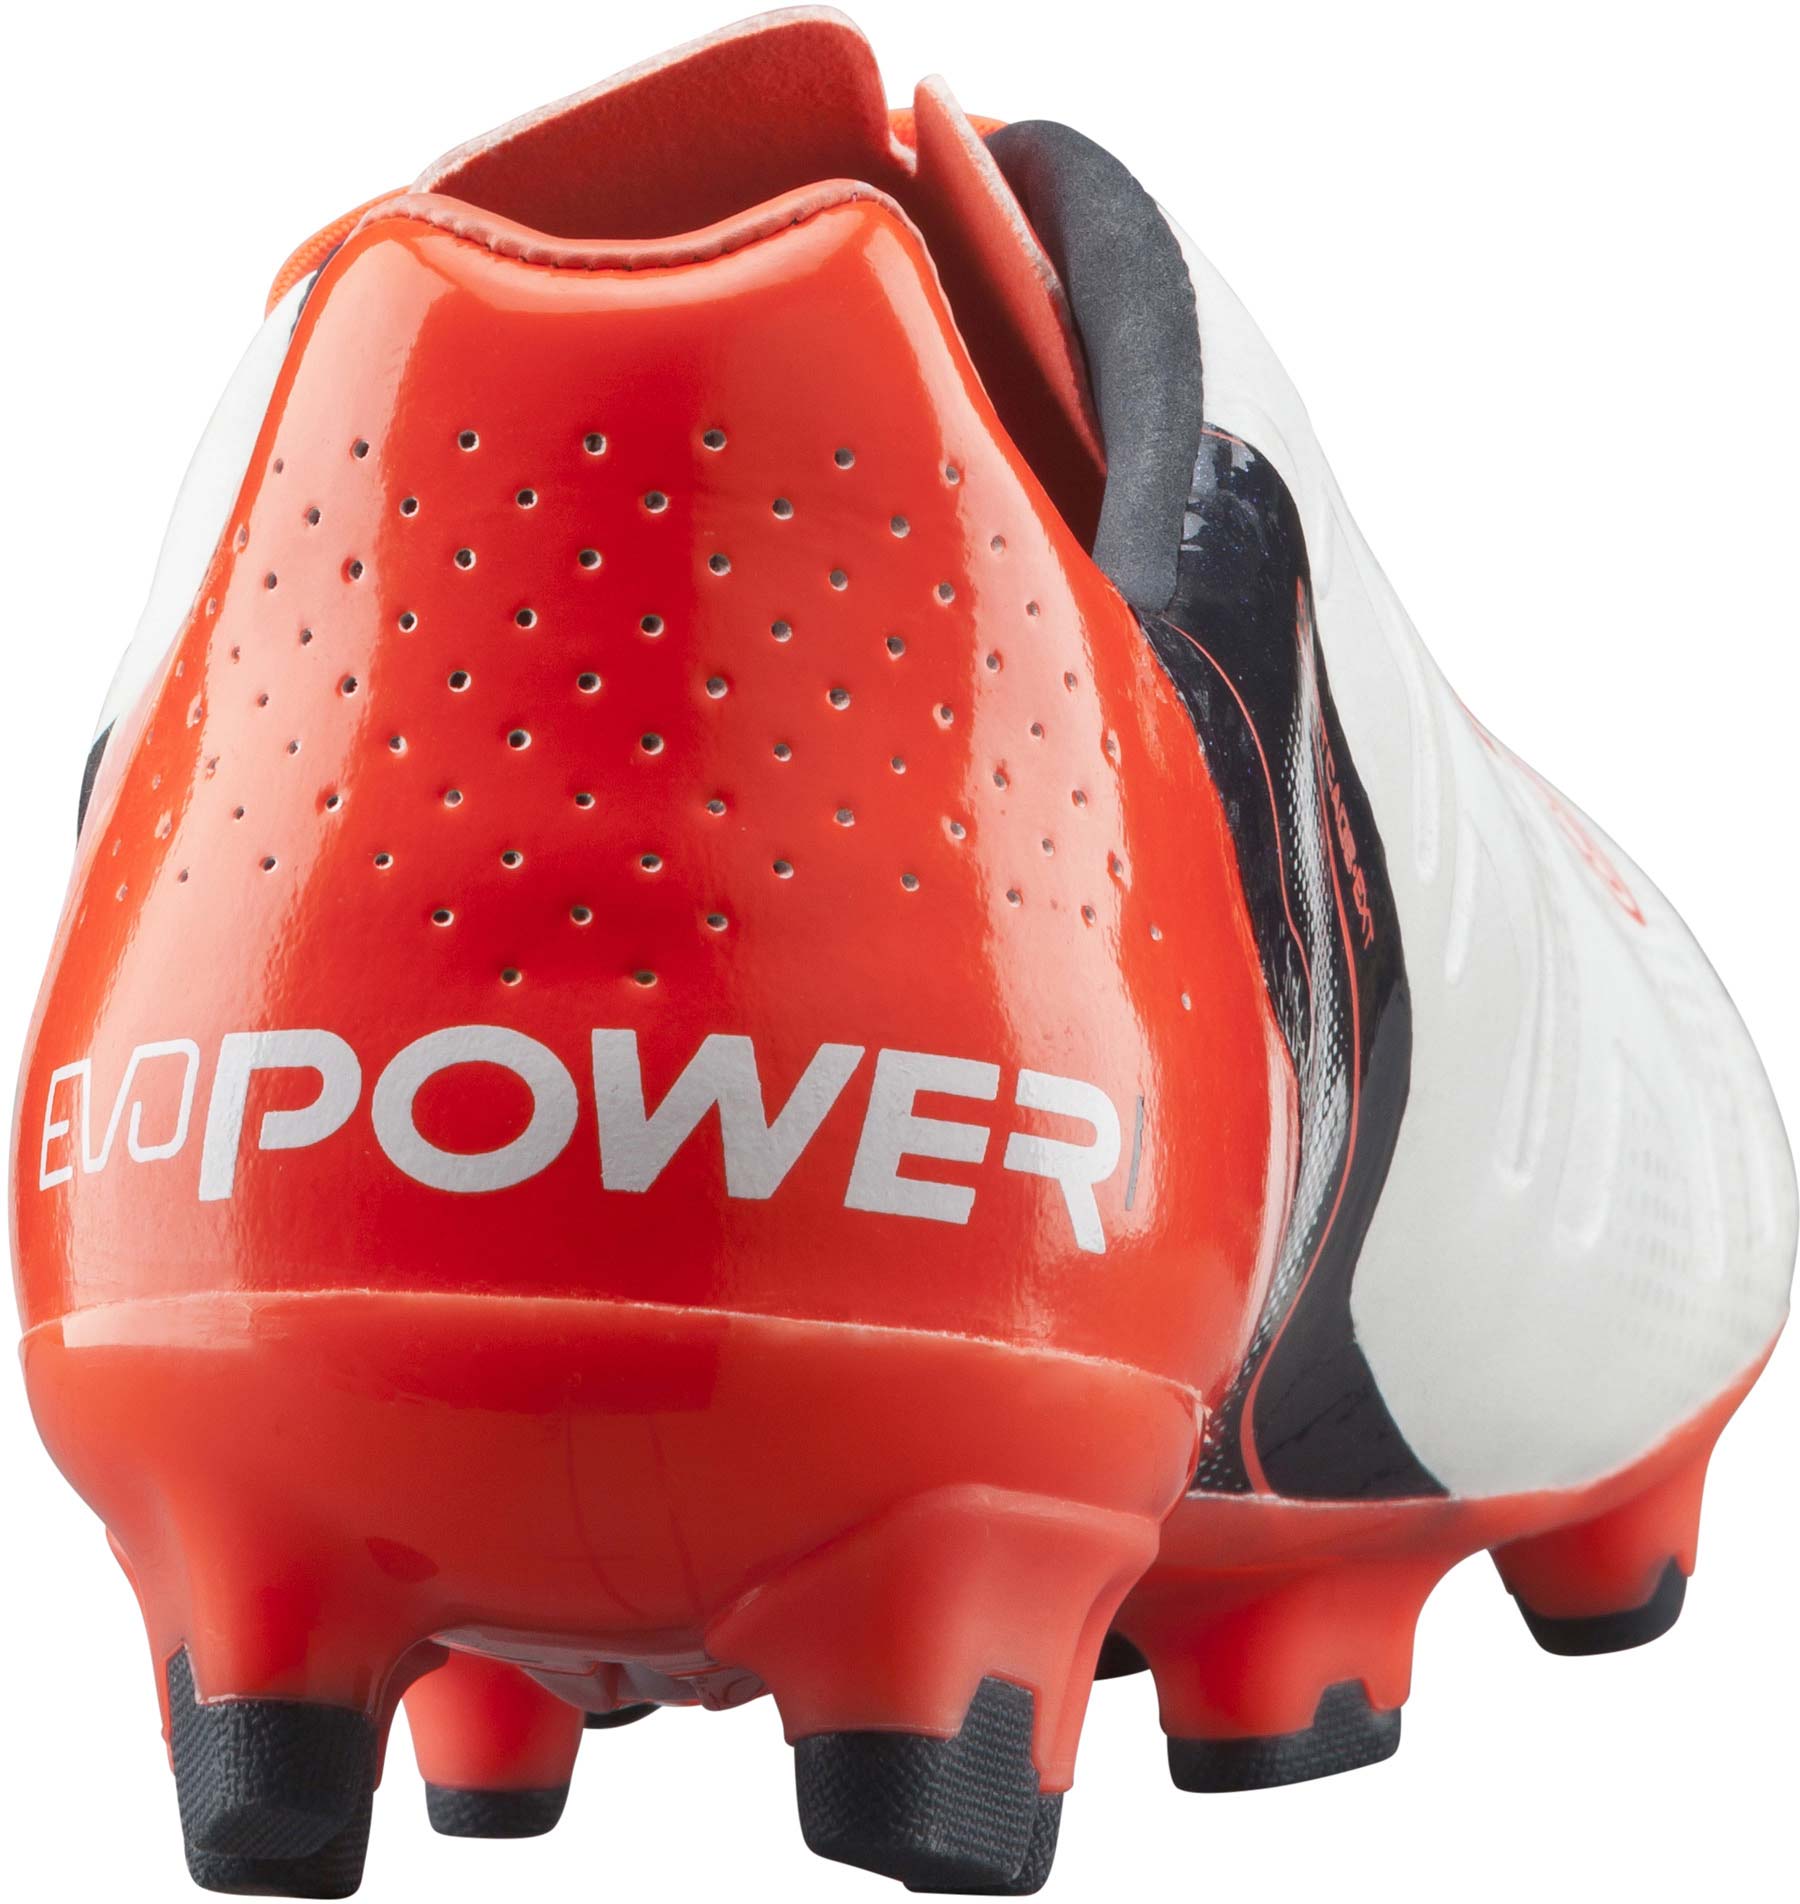 EVO POWER 1.2 FG - Football Boots